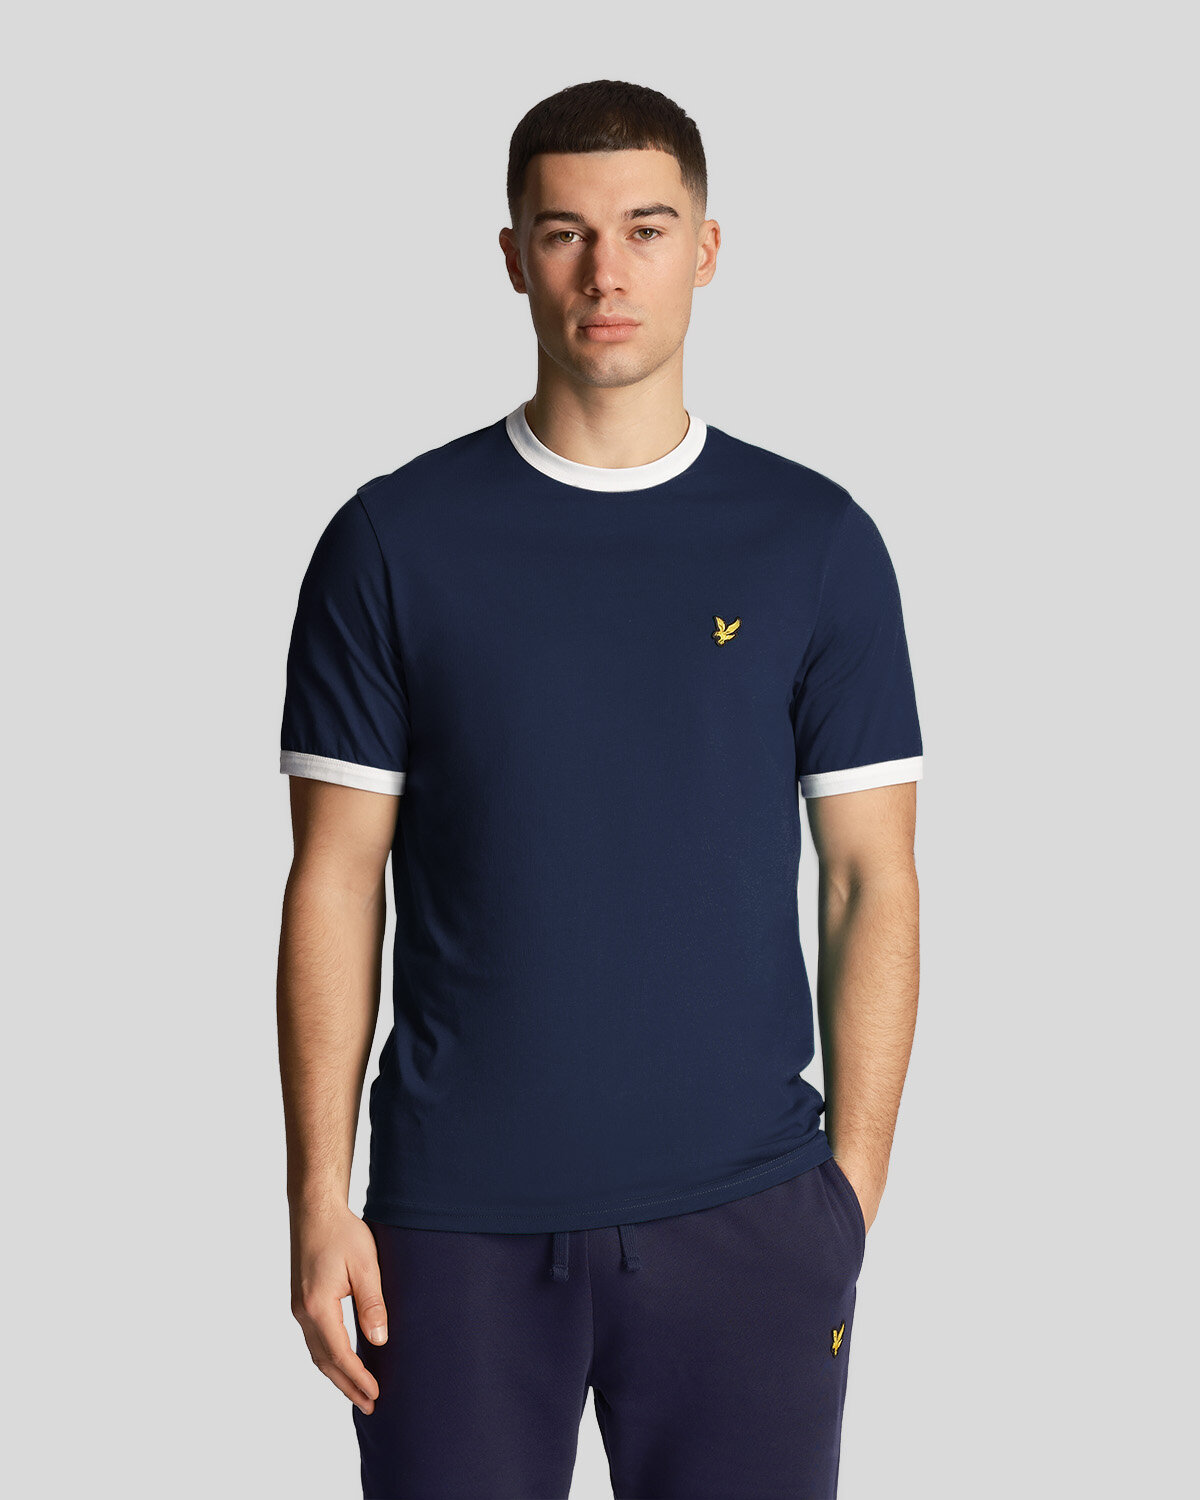 Футболка Lyle & Scott Ringer T-Shirt, размер L, белый, синий